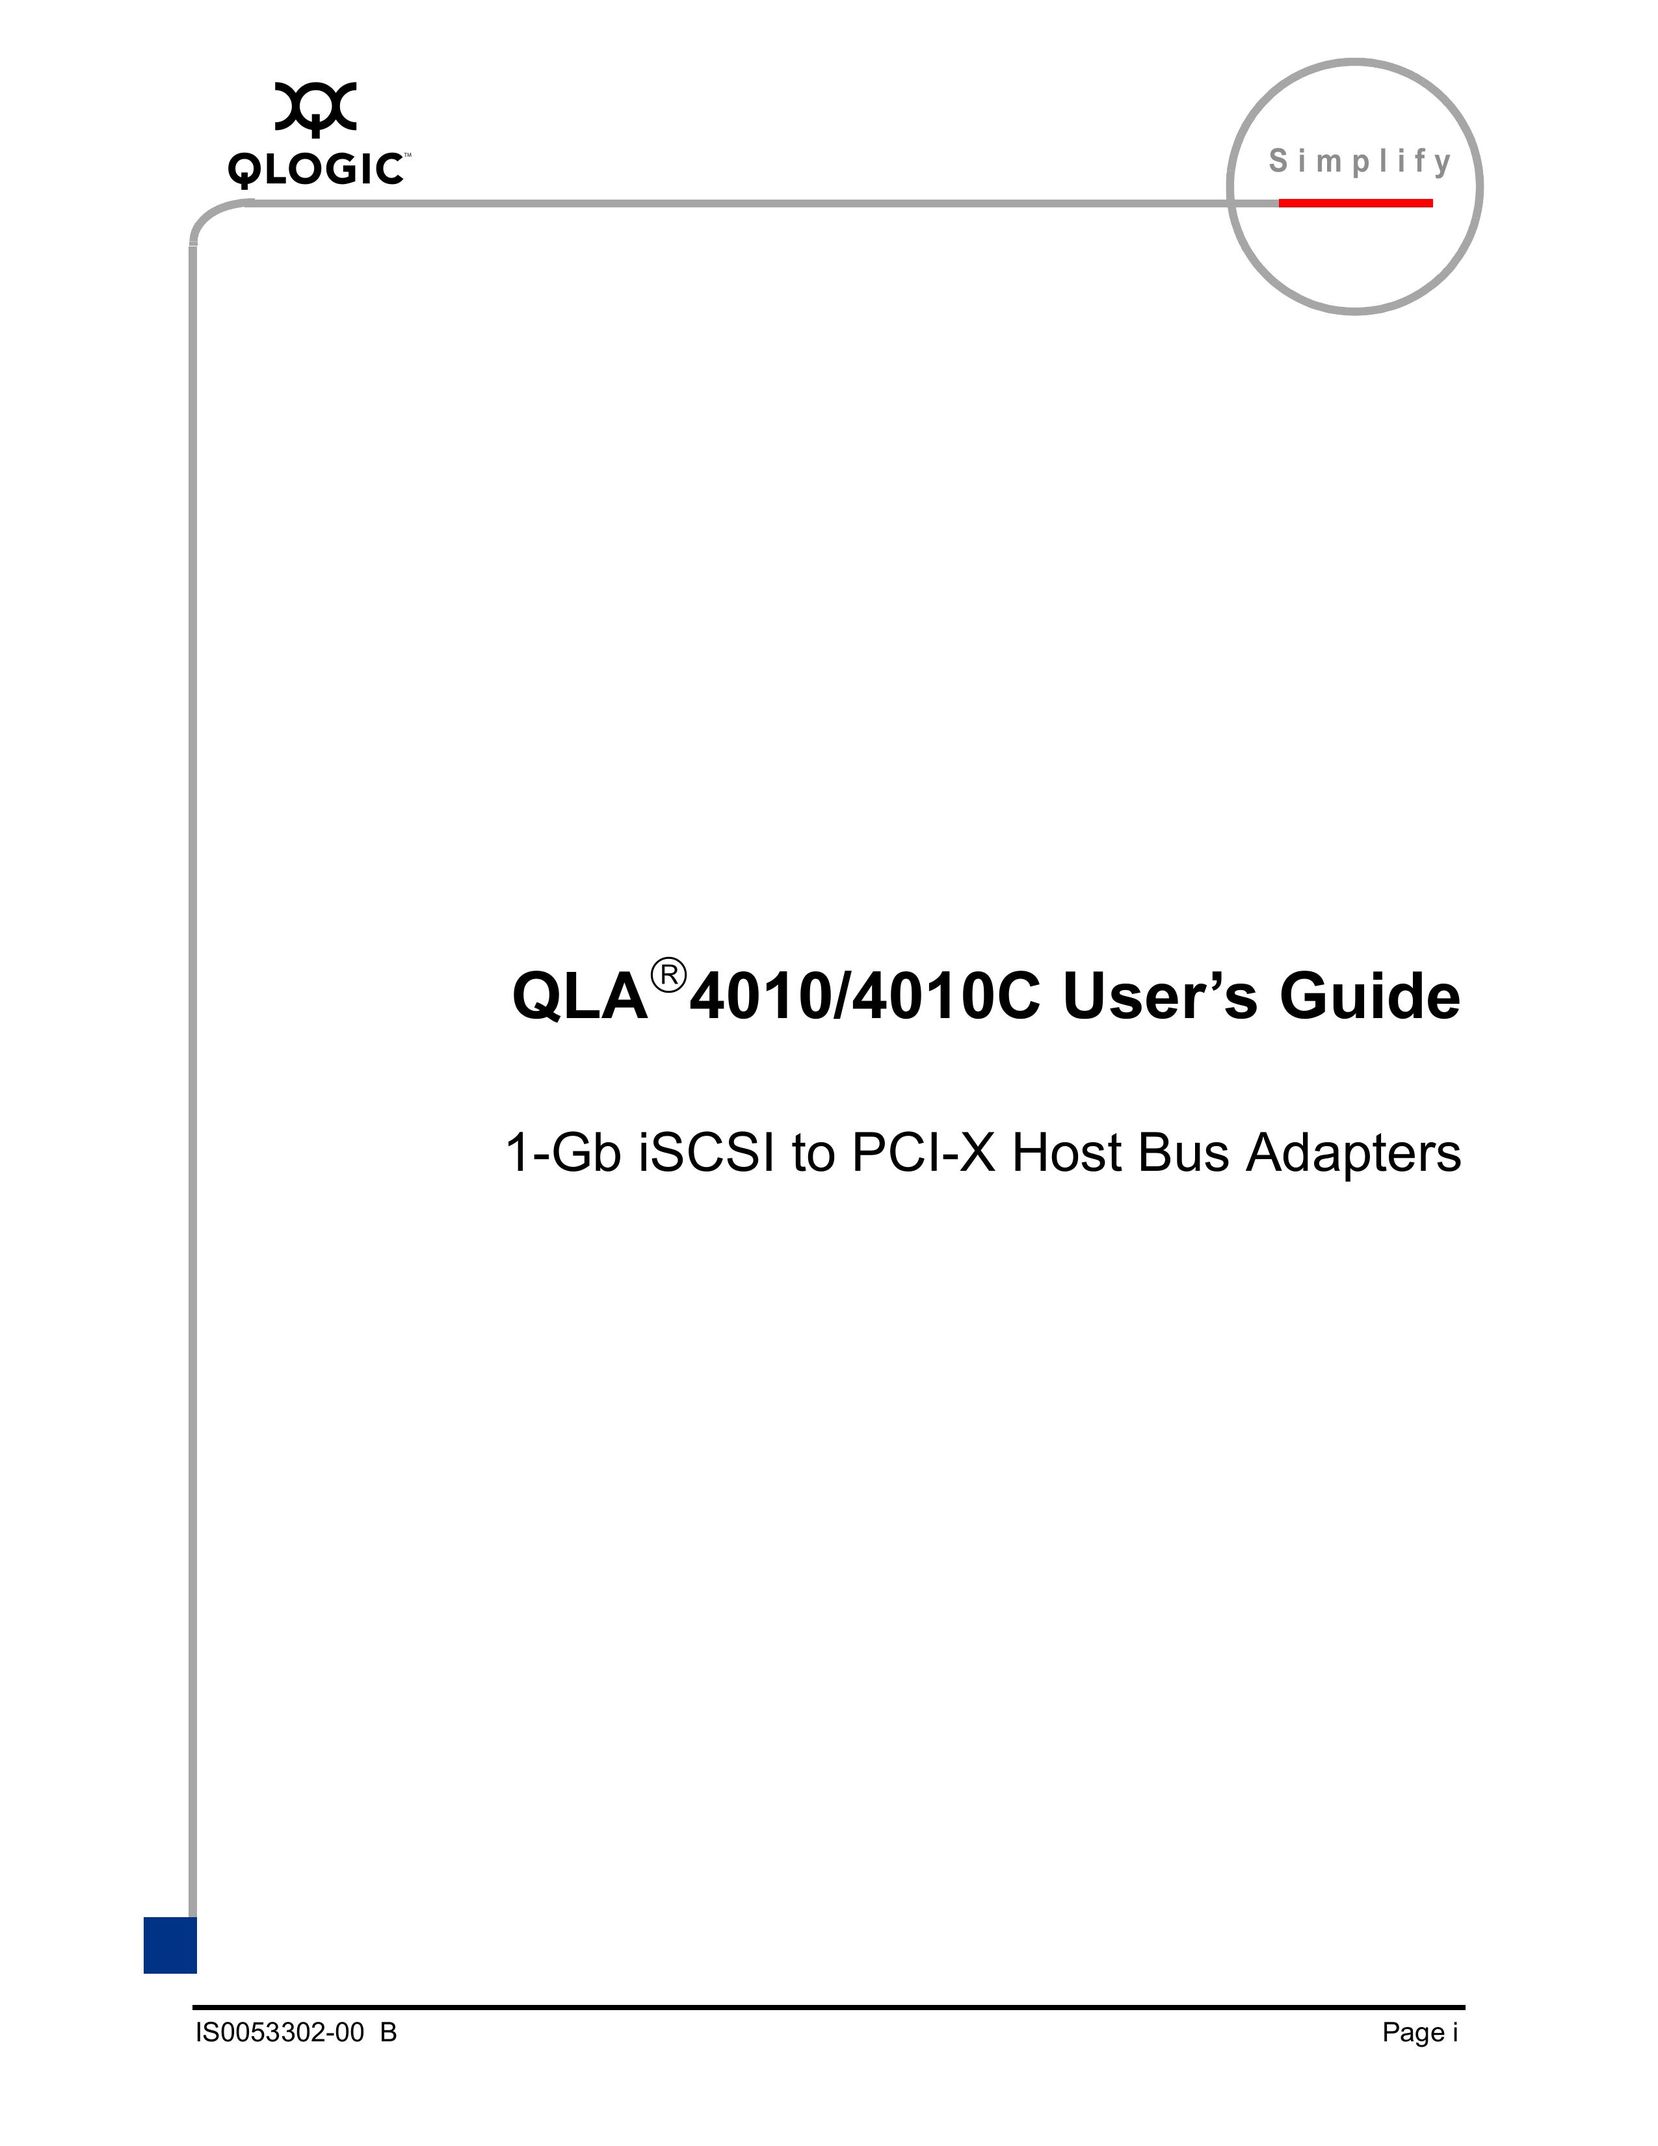 Q-Logic 4010C Computer Hardware User Manual